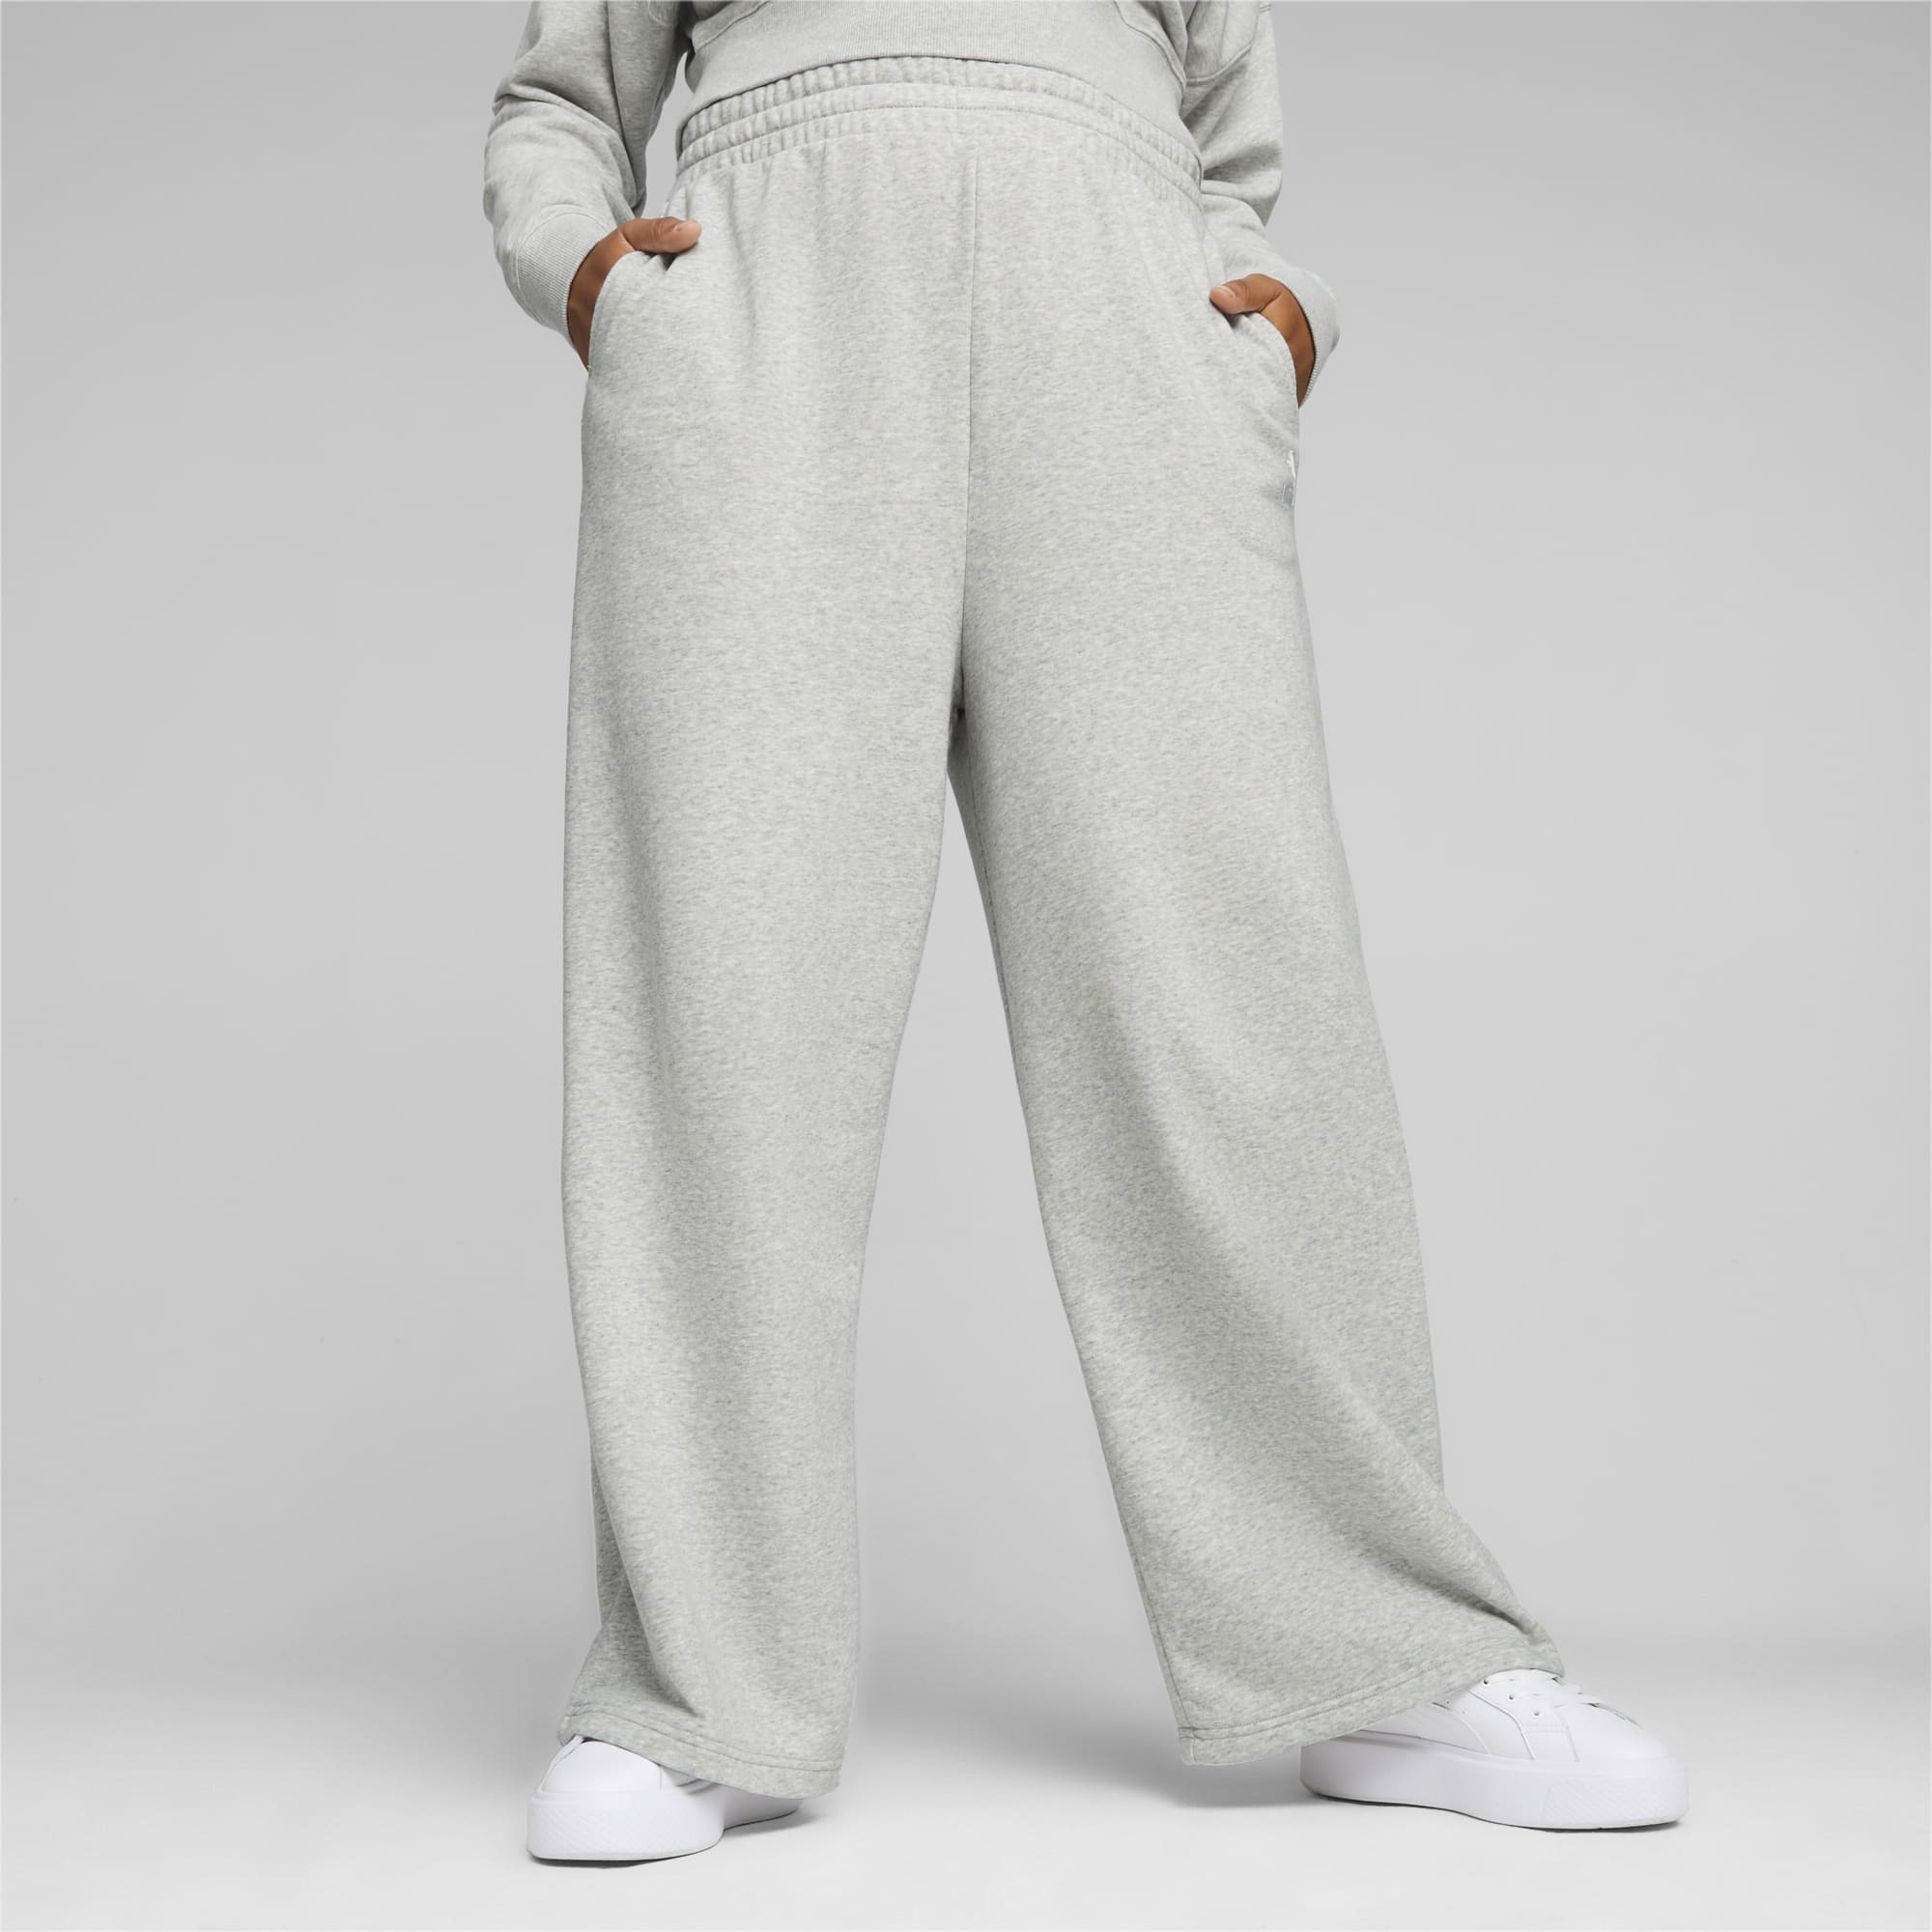 PUMA Classics Women's Relaxed Sweatpants, Light Grey Heather, Size XXS, Clothing